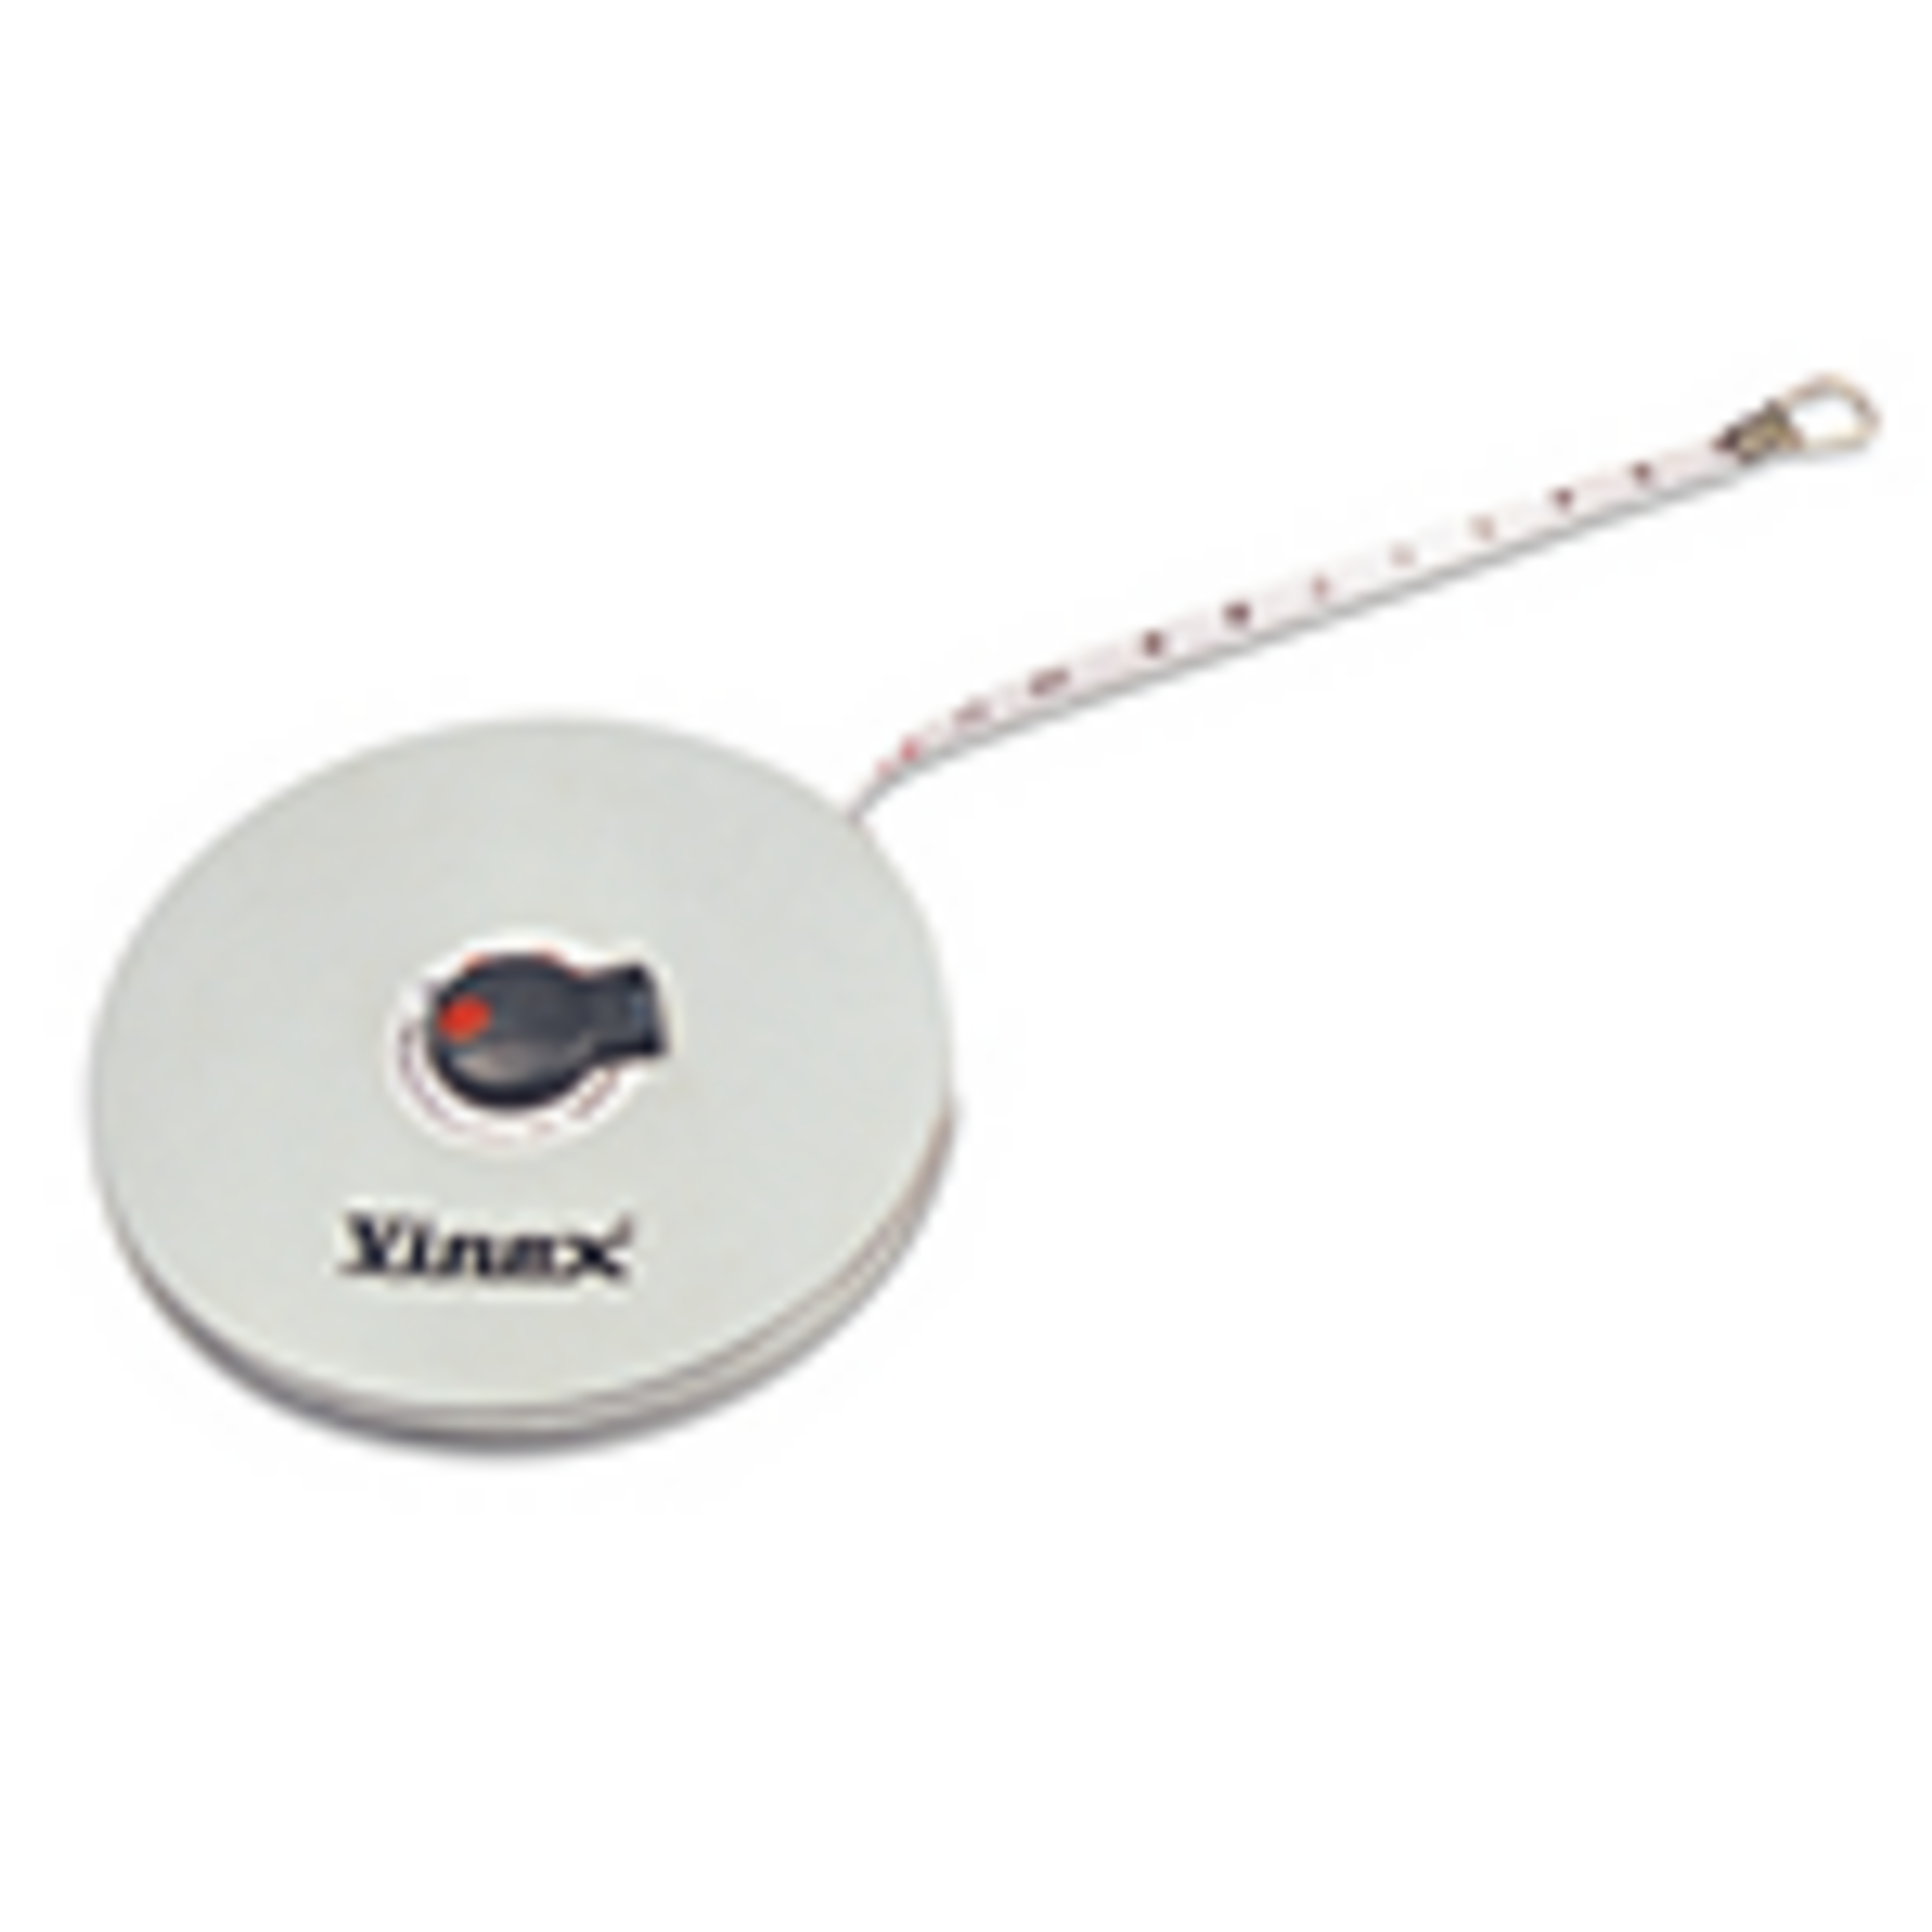 HC1566604 - Vinex Closed Reel Measuring Tape - 50m